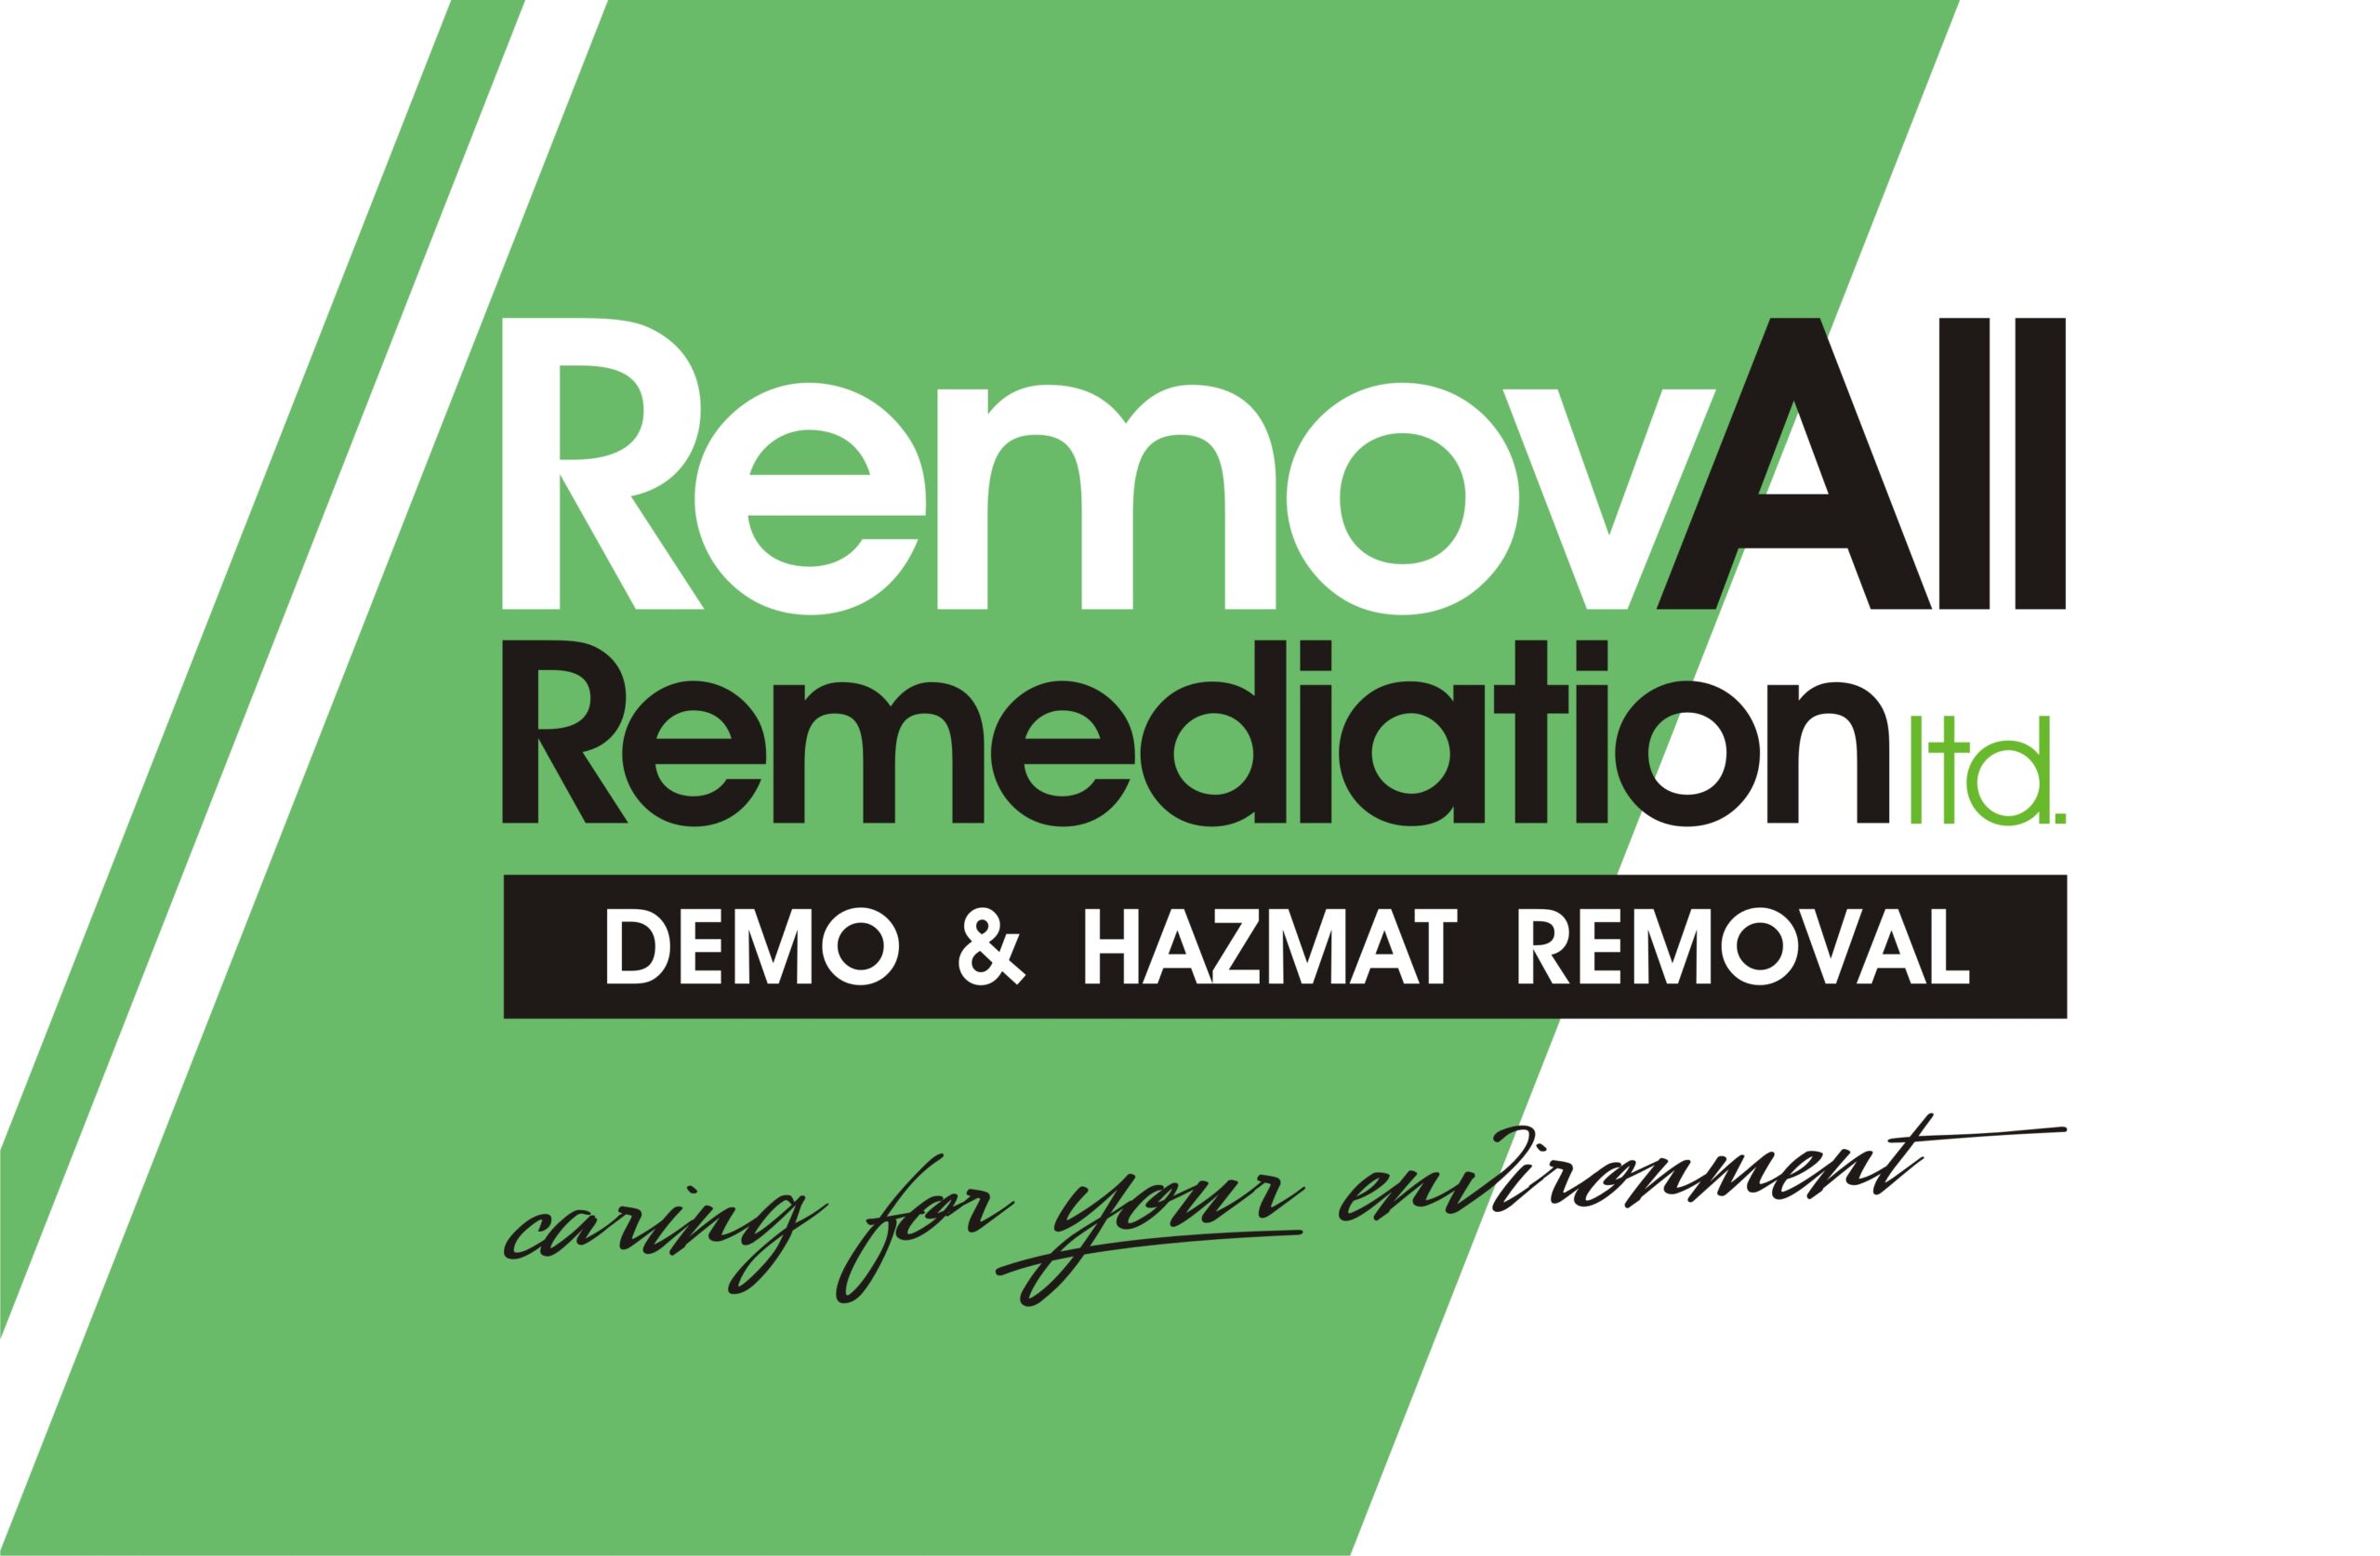 RemoveAll Remediation Ltd.